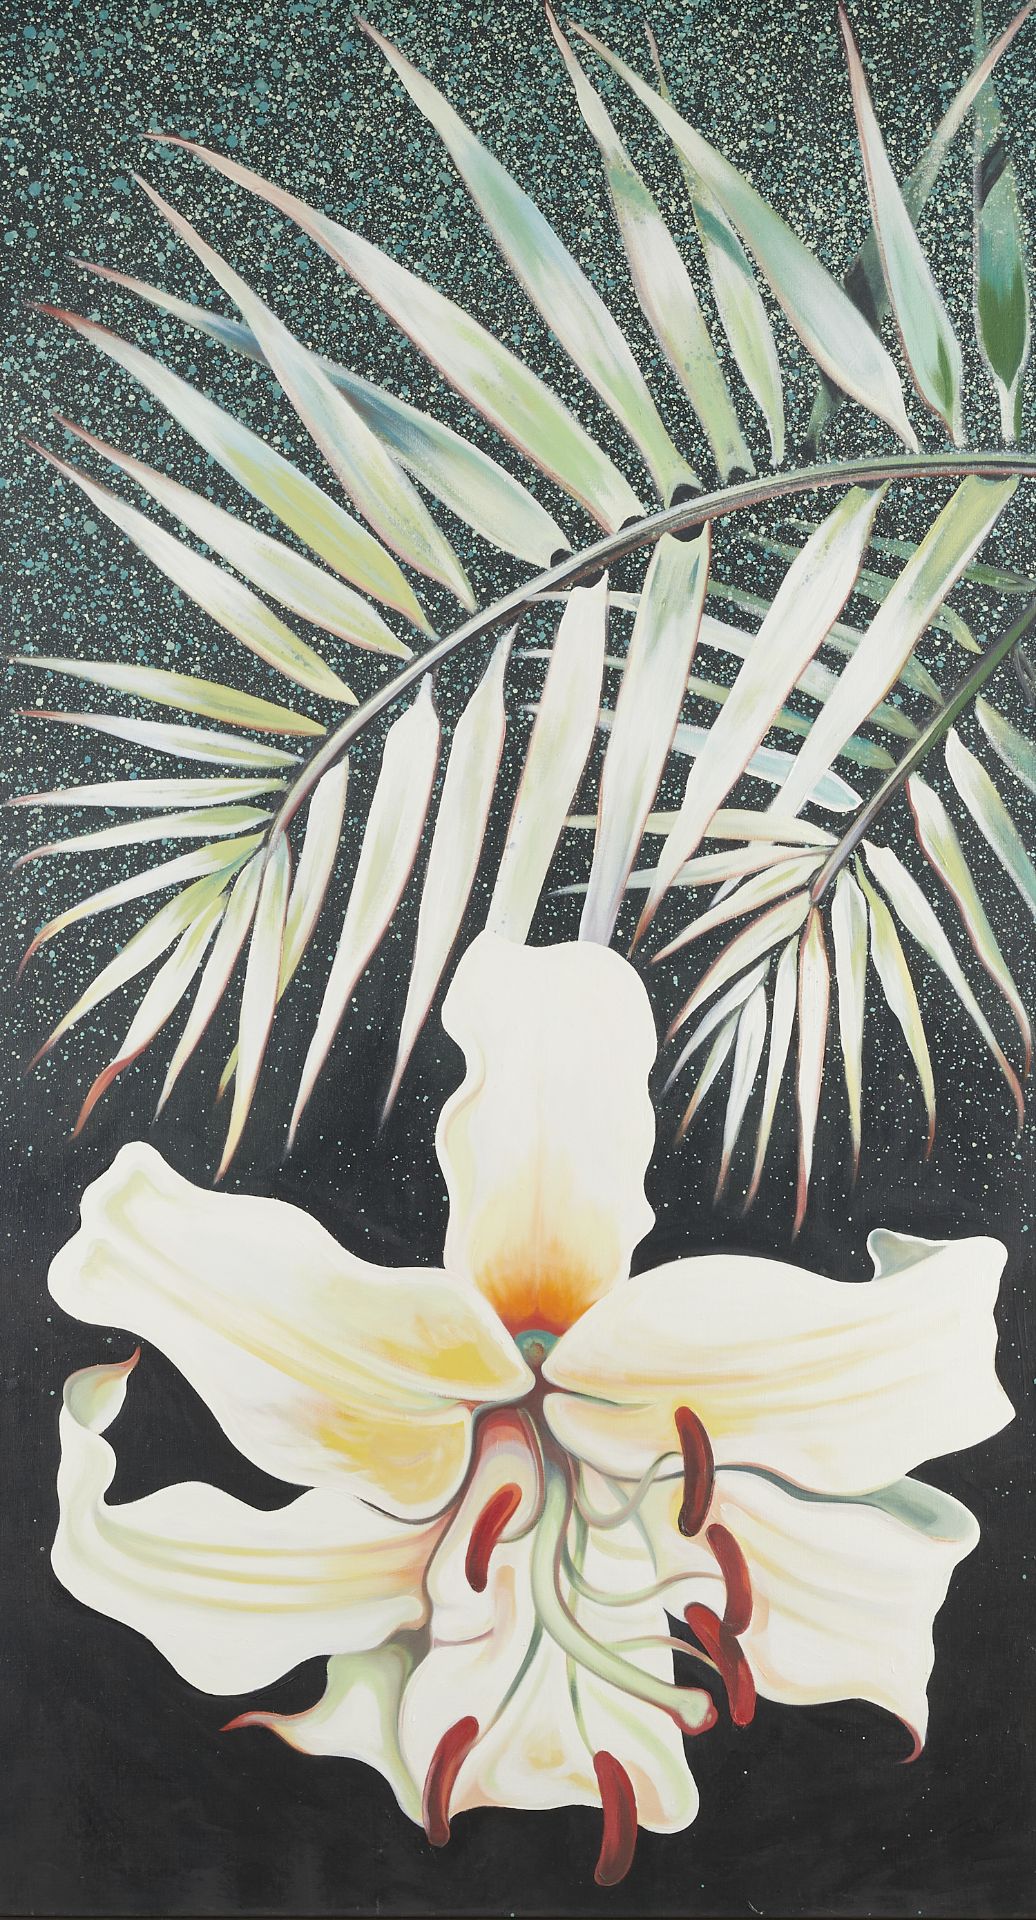 Lowell Nesbitt "Jungle Lily" Oil on Canvas 1987